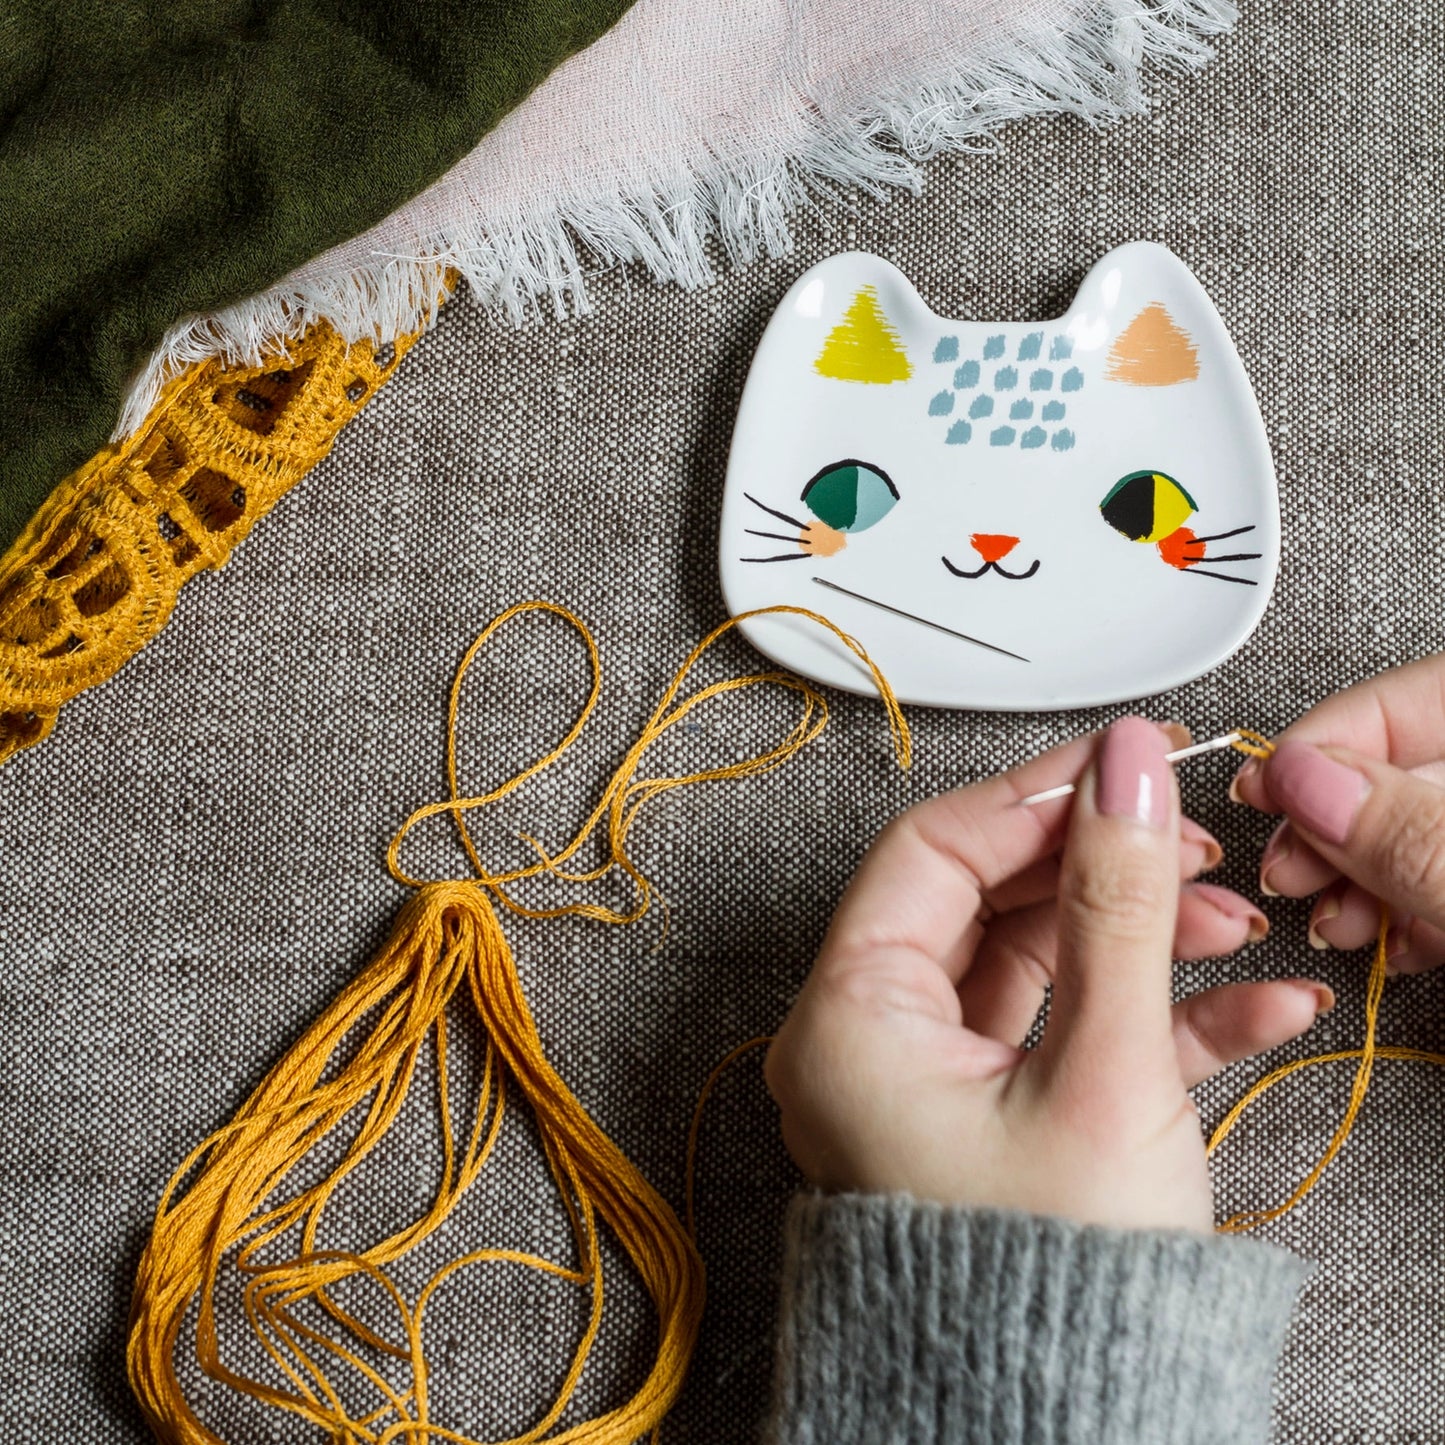 Meow Meow Cat Shaped Ceramic Trinket Tray